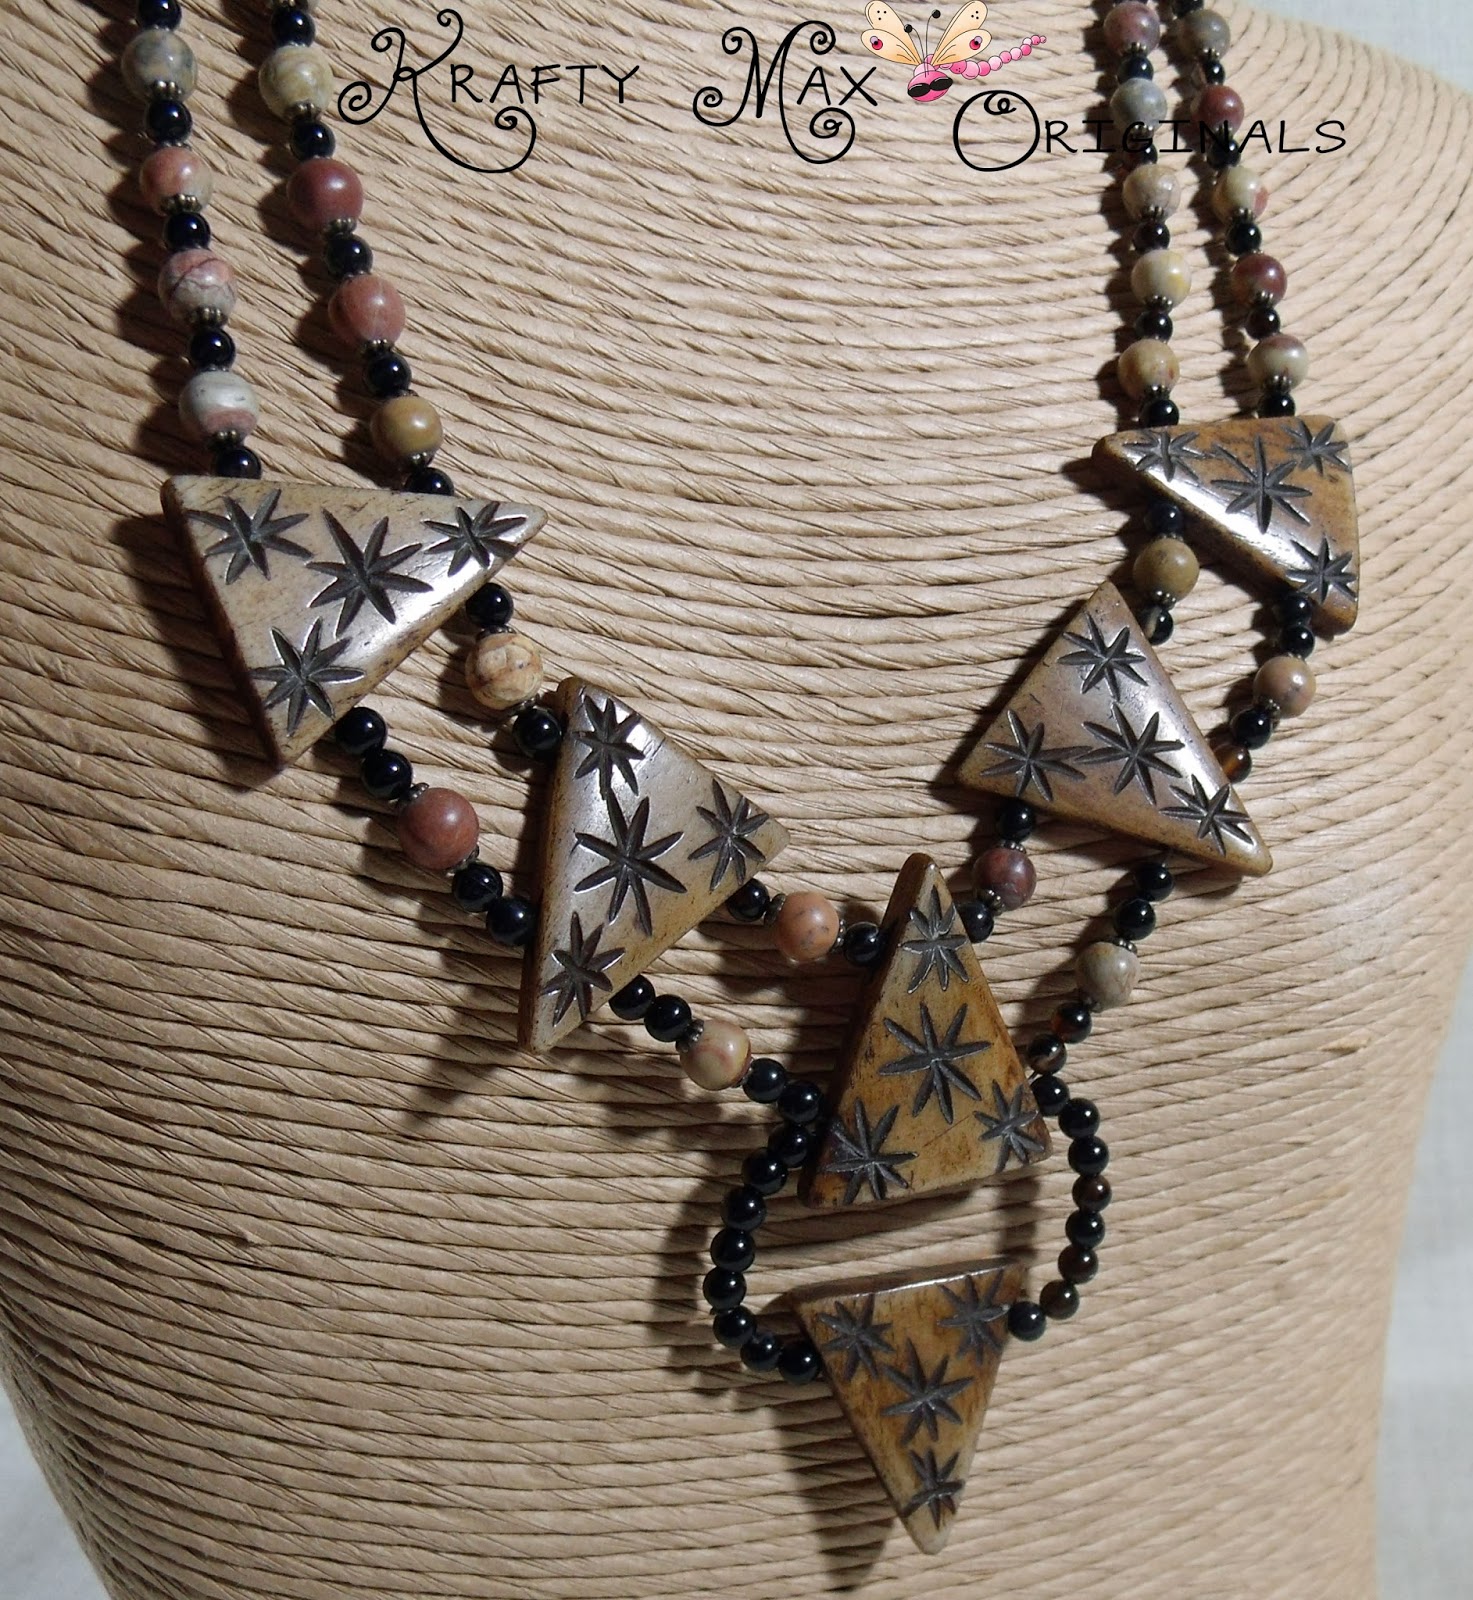 http://www.lajuliet.com/index.php/2013-01-04-15-21-51/ad/gemstone,92/exclusive-bone-triangle-detailed-and-gemstone-necklace-set-a-krafty-max-original-design,133